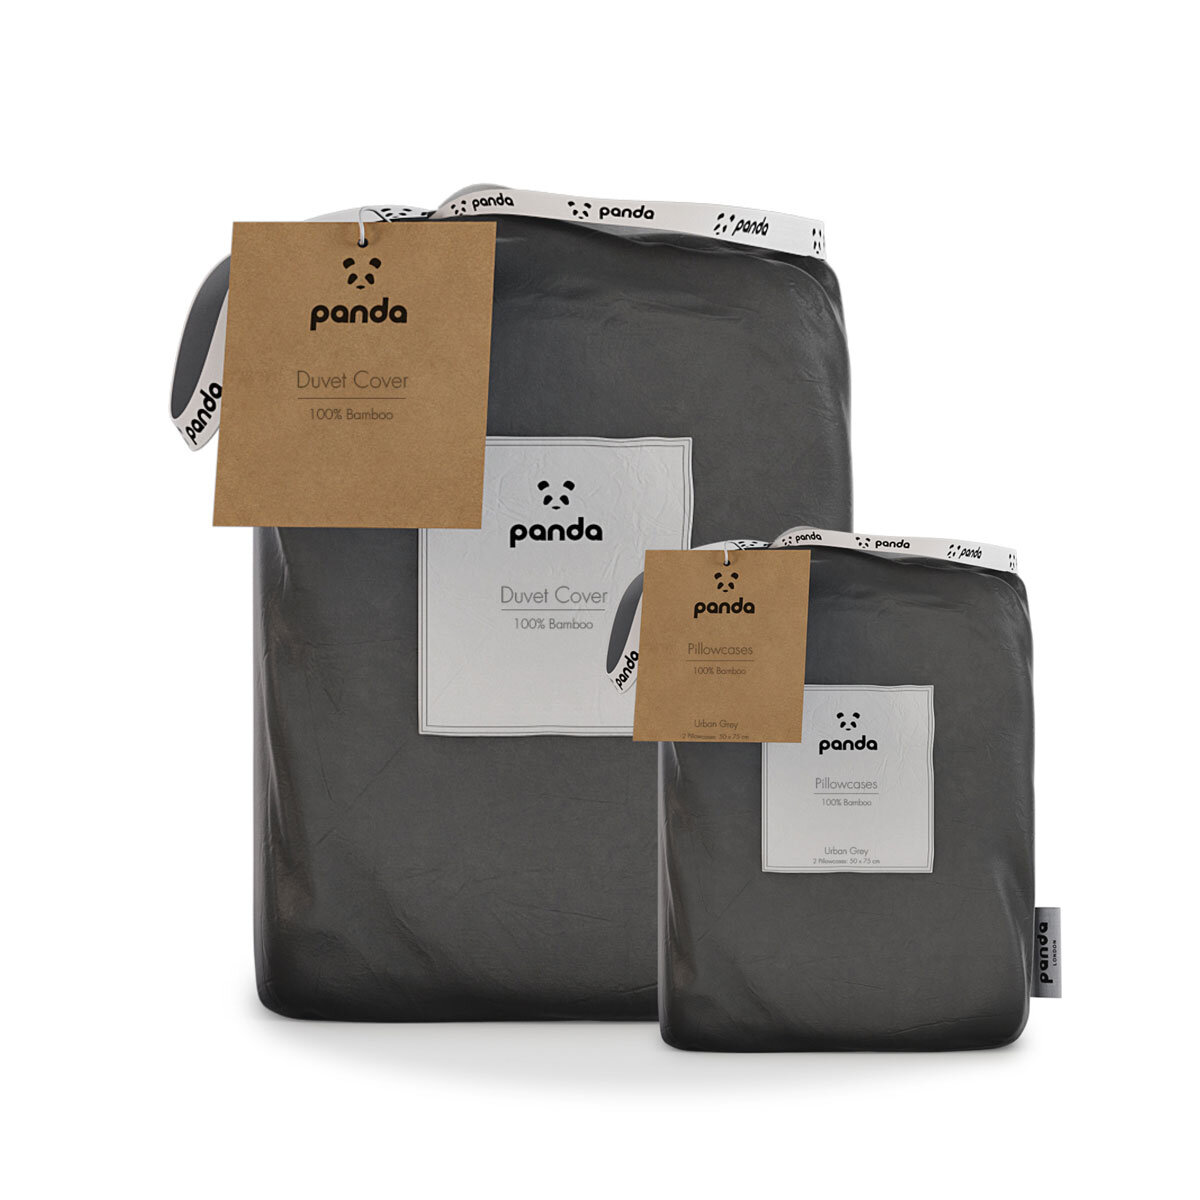 Panda 100% Bamboo Duvet Cover and Pillow Case Set in Urban Grey